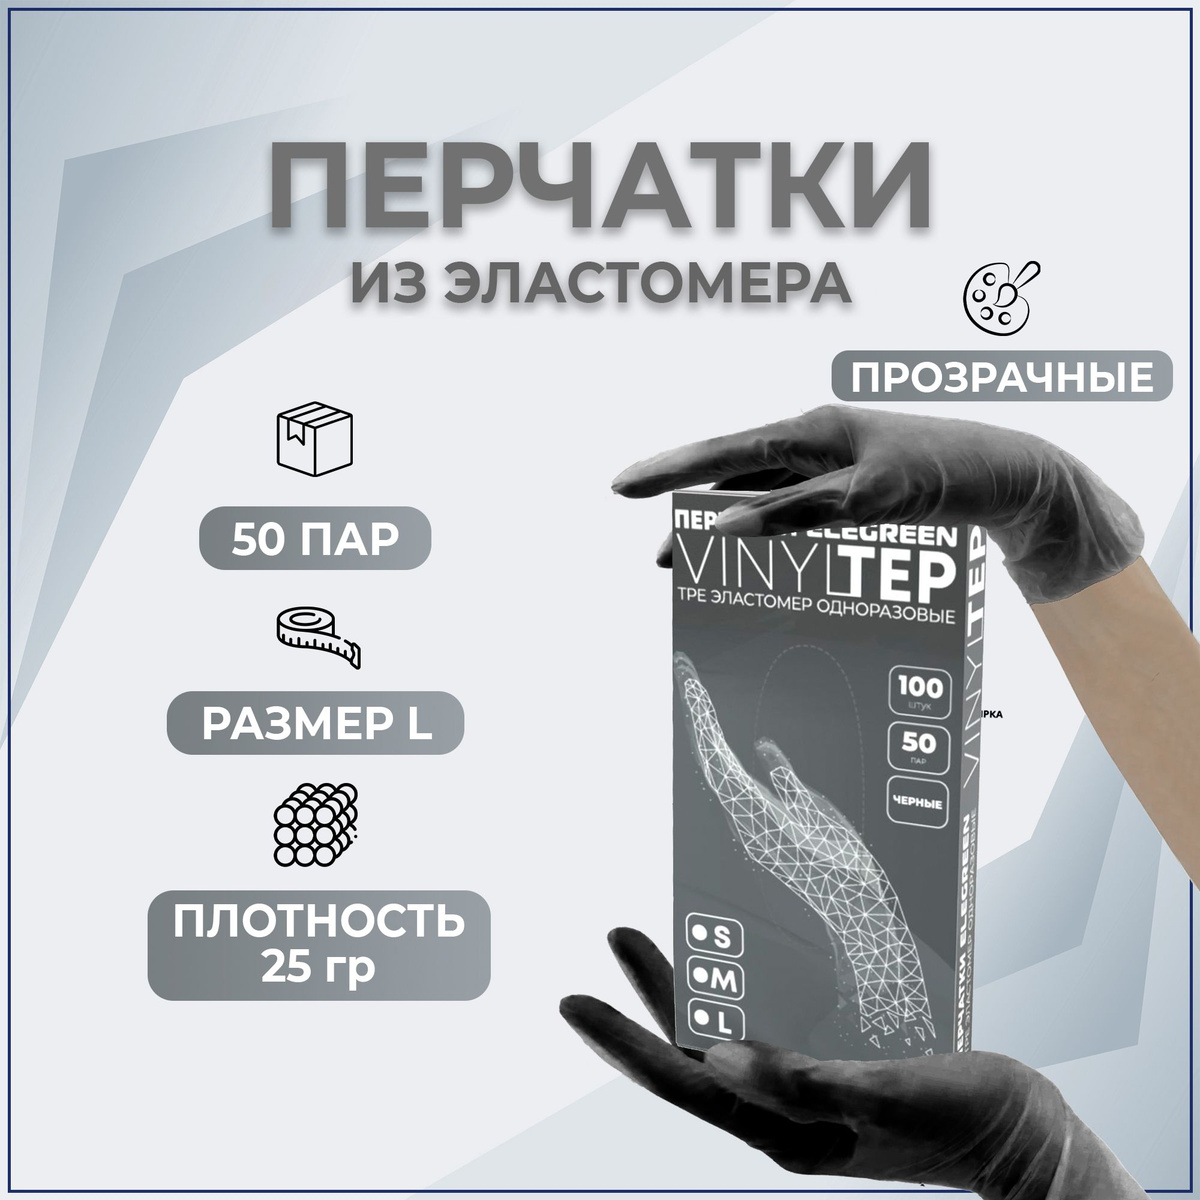 Перчатки медицинские, 50пар, размер L Термопластический эластомер (TPE)